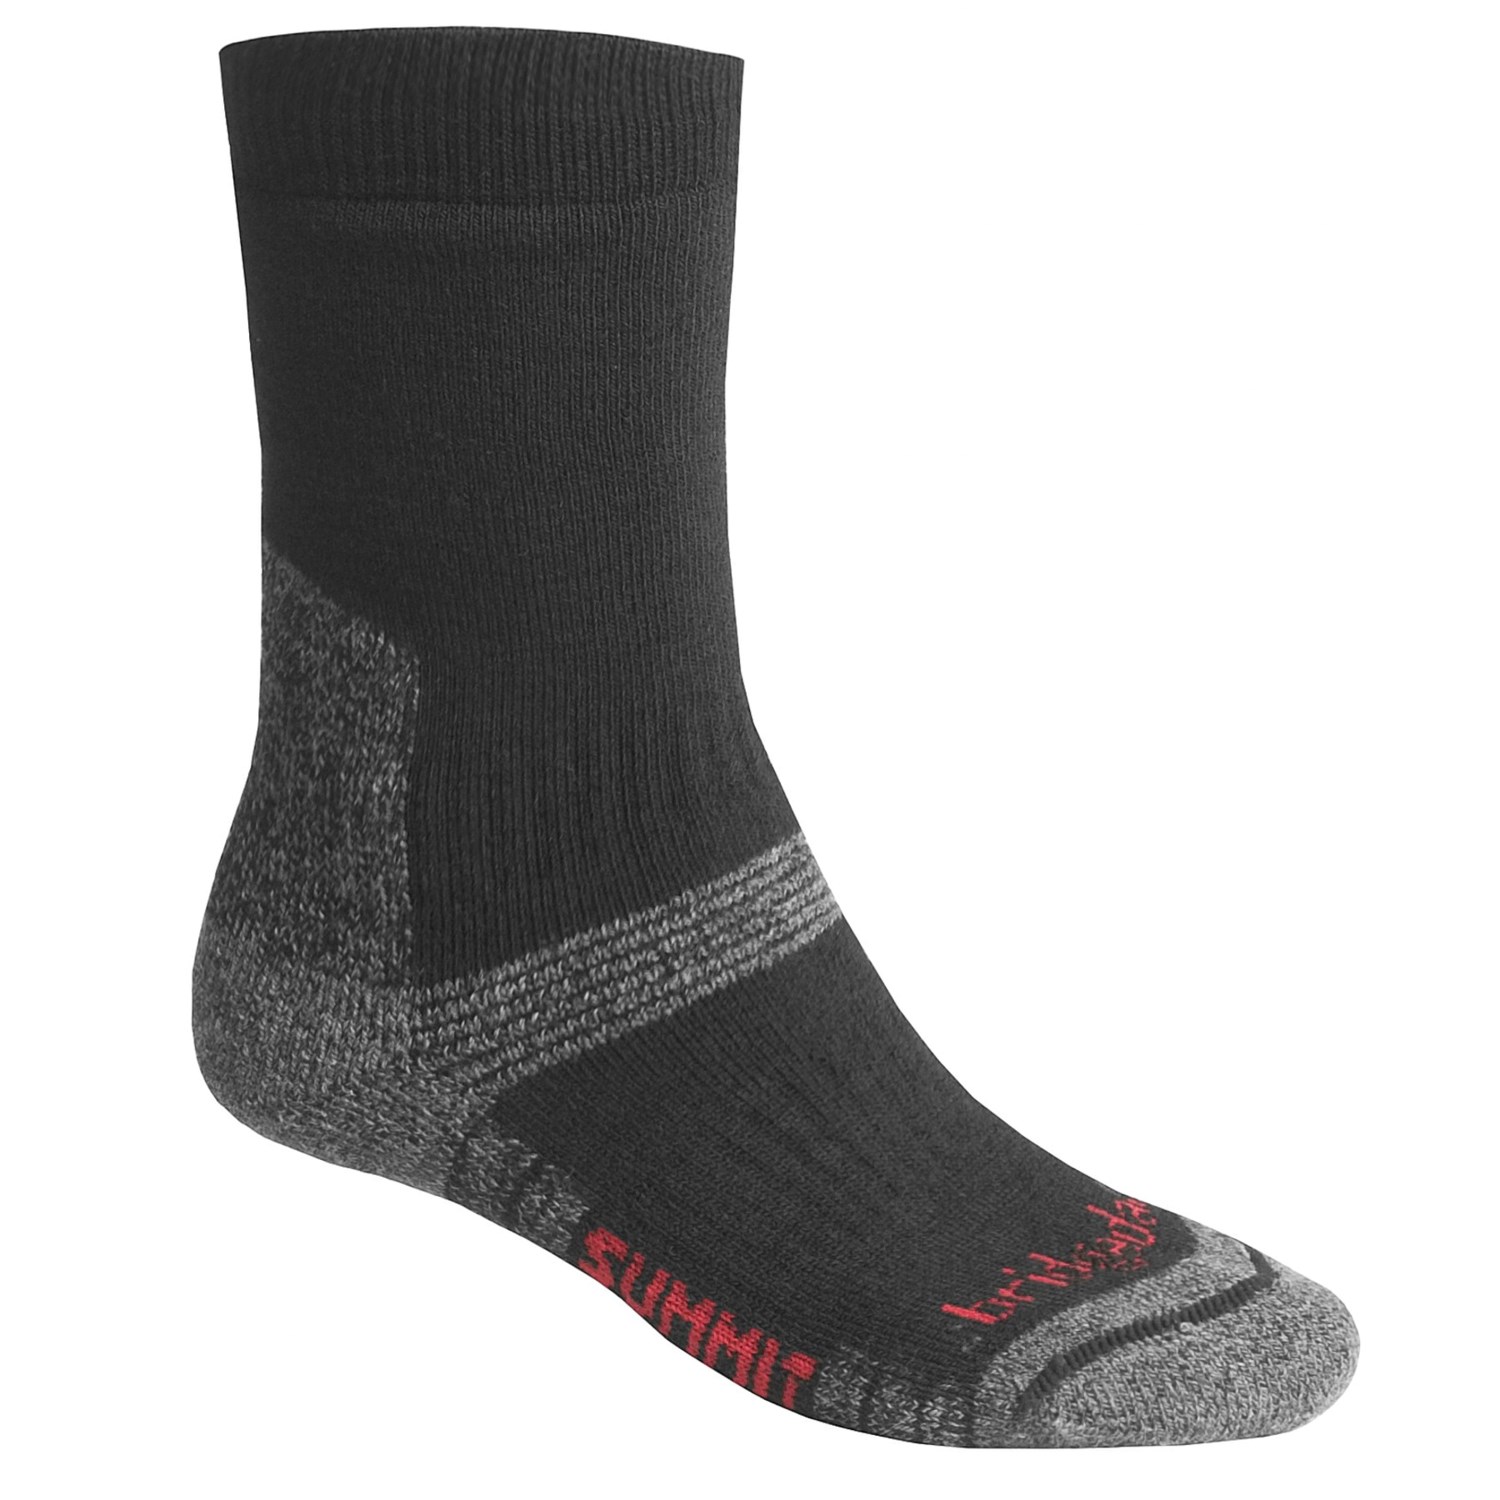 Bridgedale Endurance Summit Socks (For Men) - Save 75%